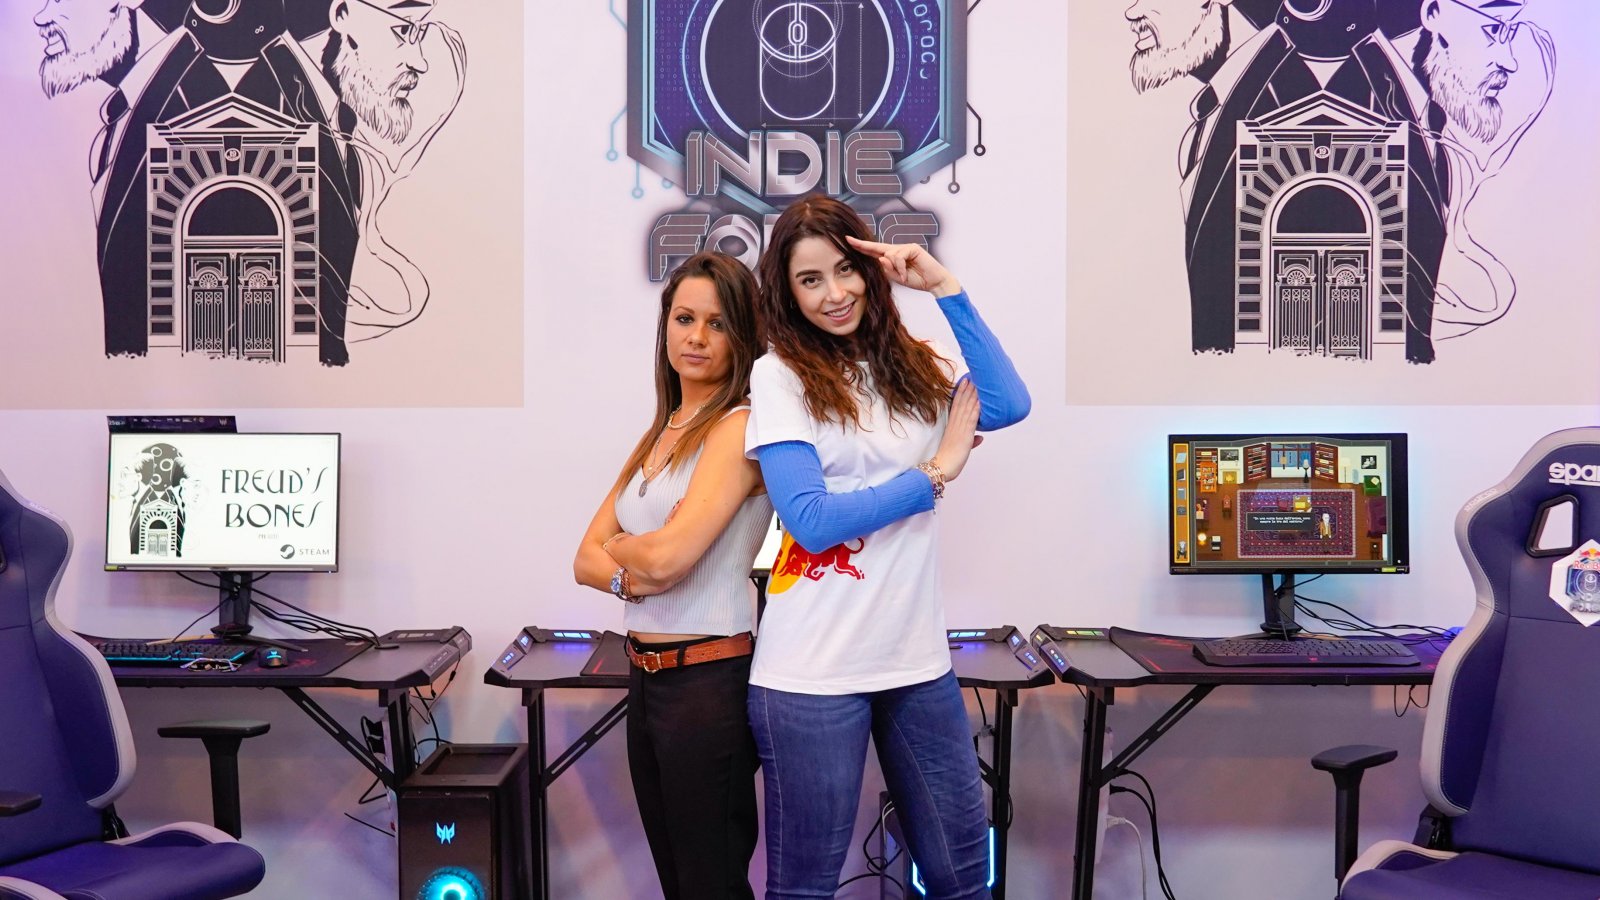 Red Bull Indie Forge sarà alla Milan Games Week & Cartoomics